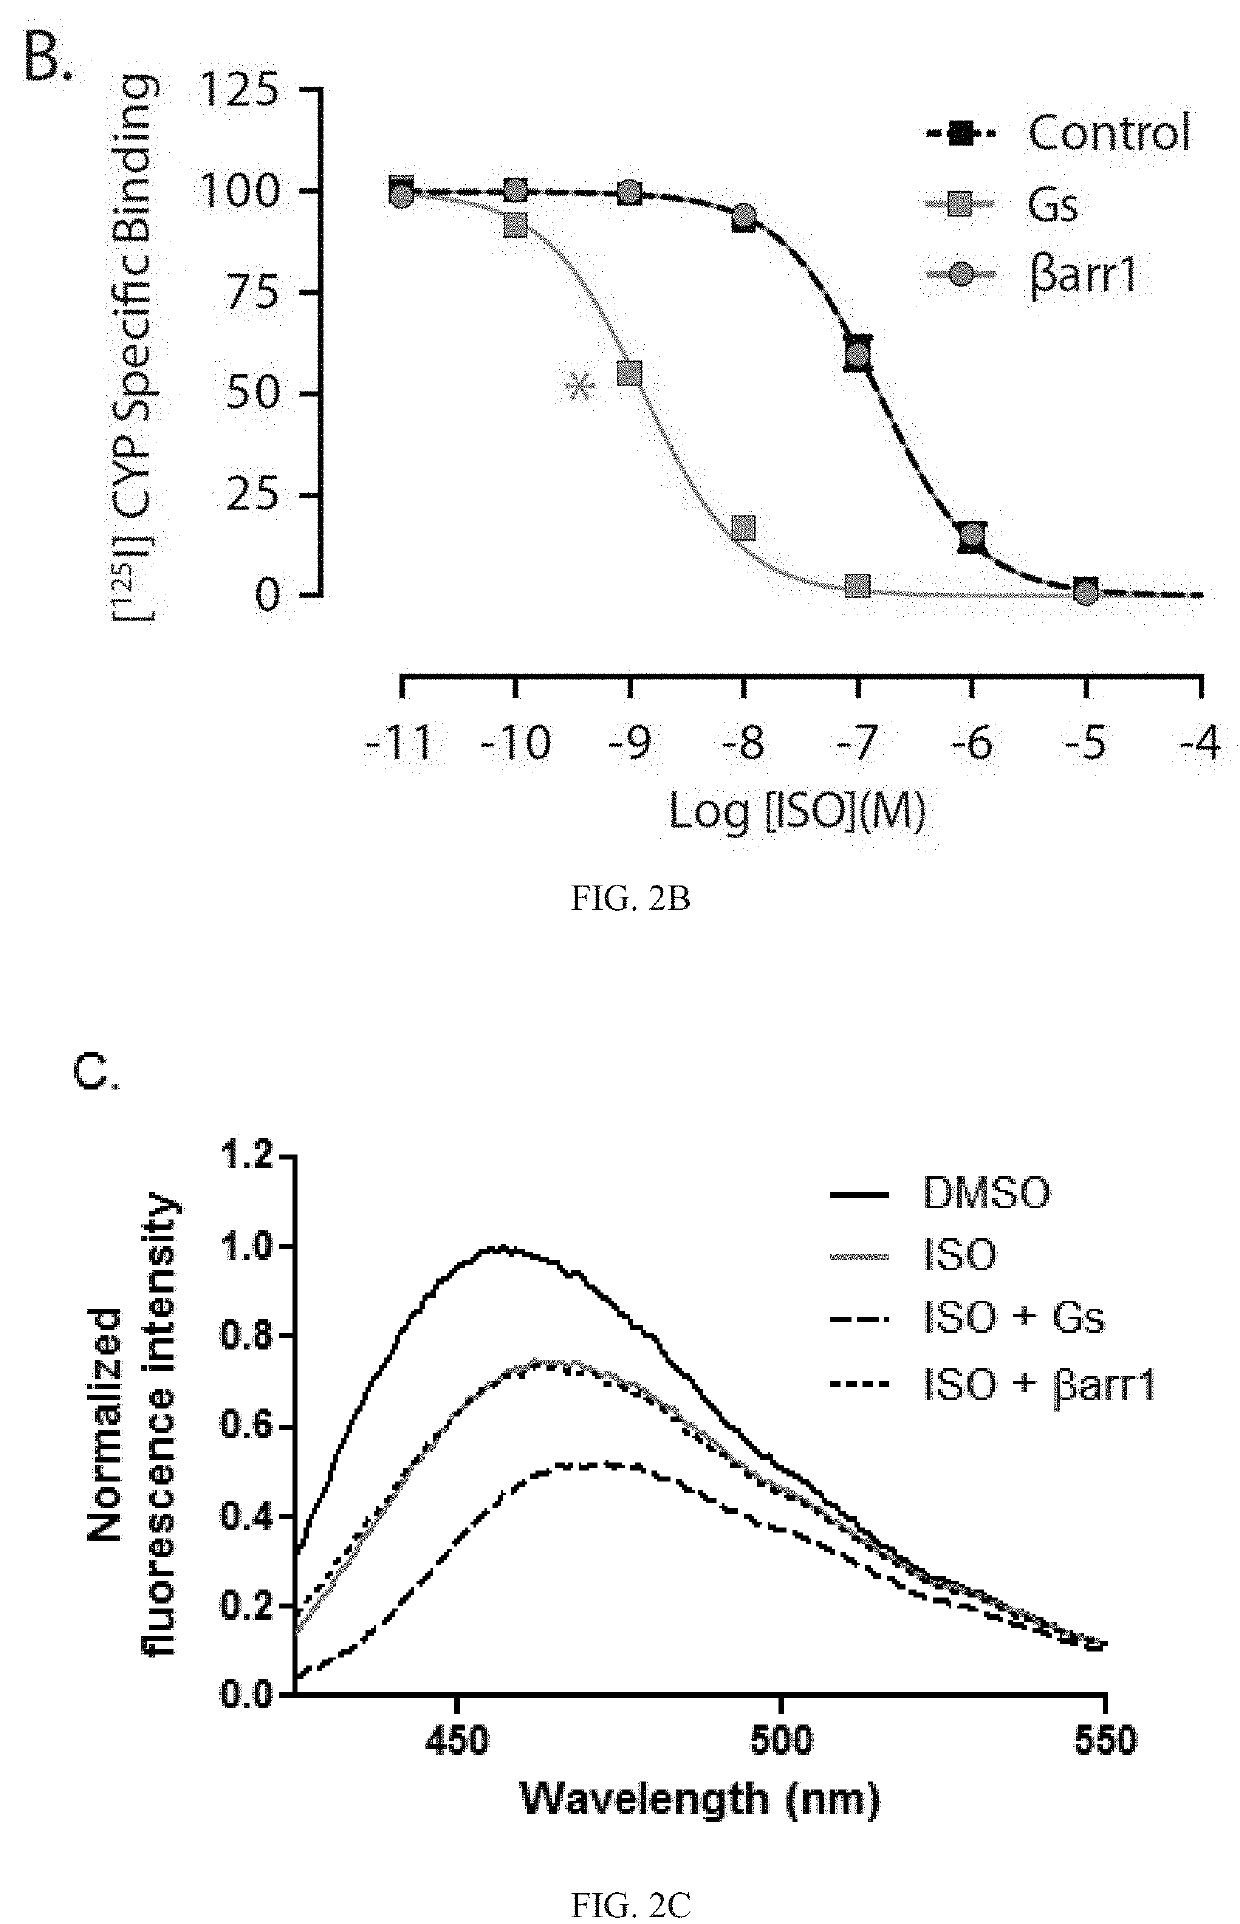 System and method for homogenous gpcr phosphorylation and identification of beta-2 adrenergic receptor positive allosteric modulators